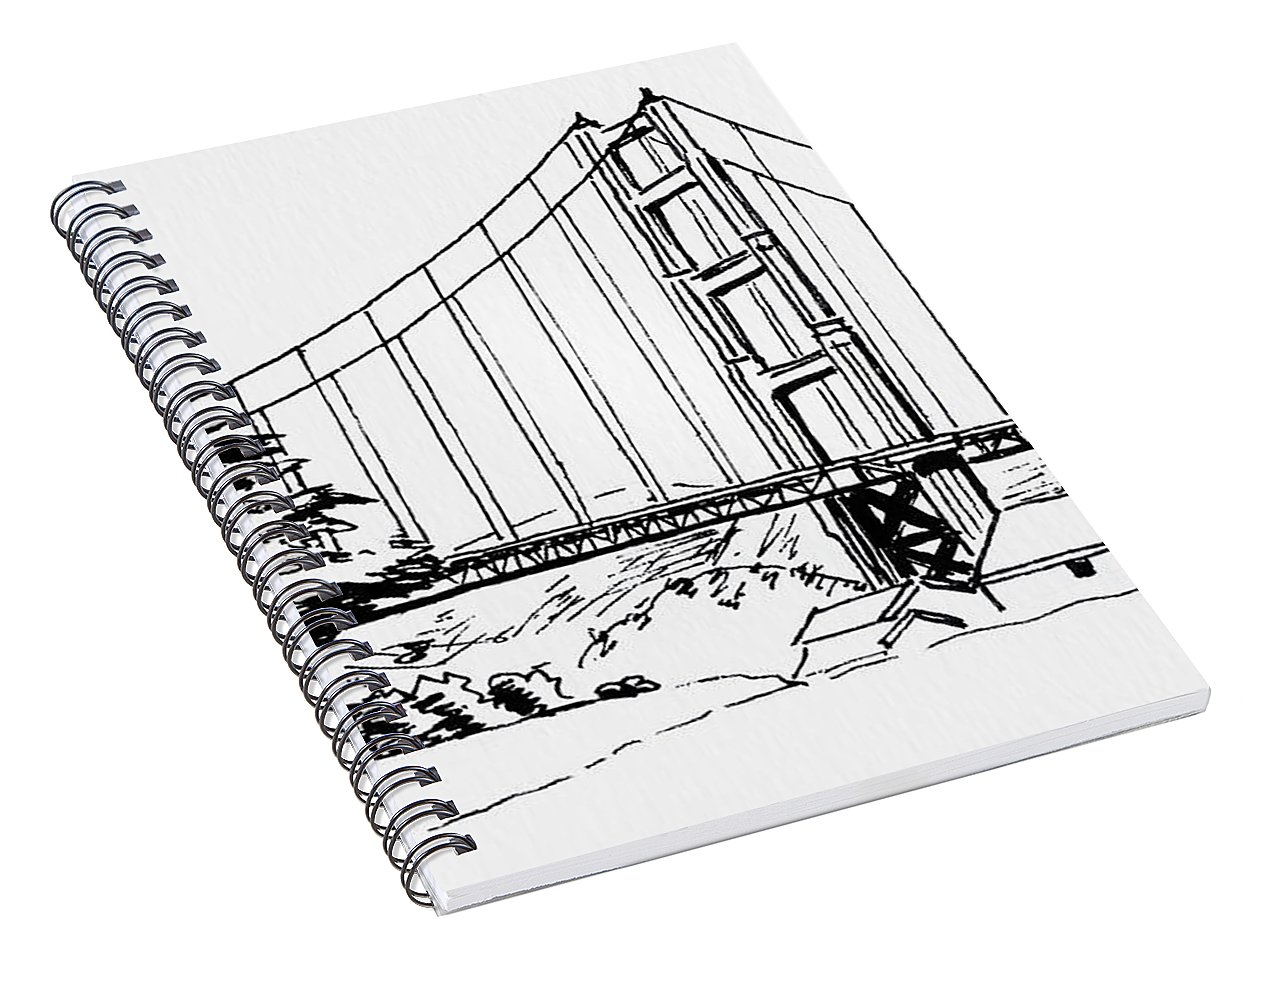 Golden Gate Bridge Drawing at GetDrawings | Free download